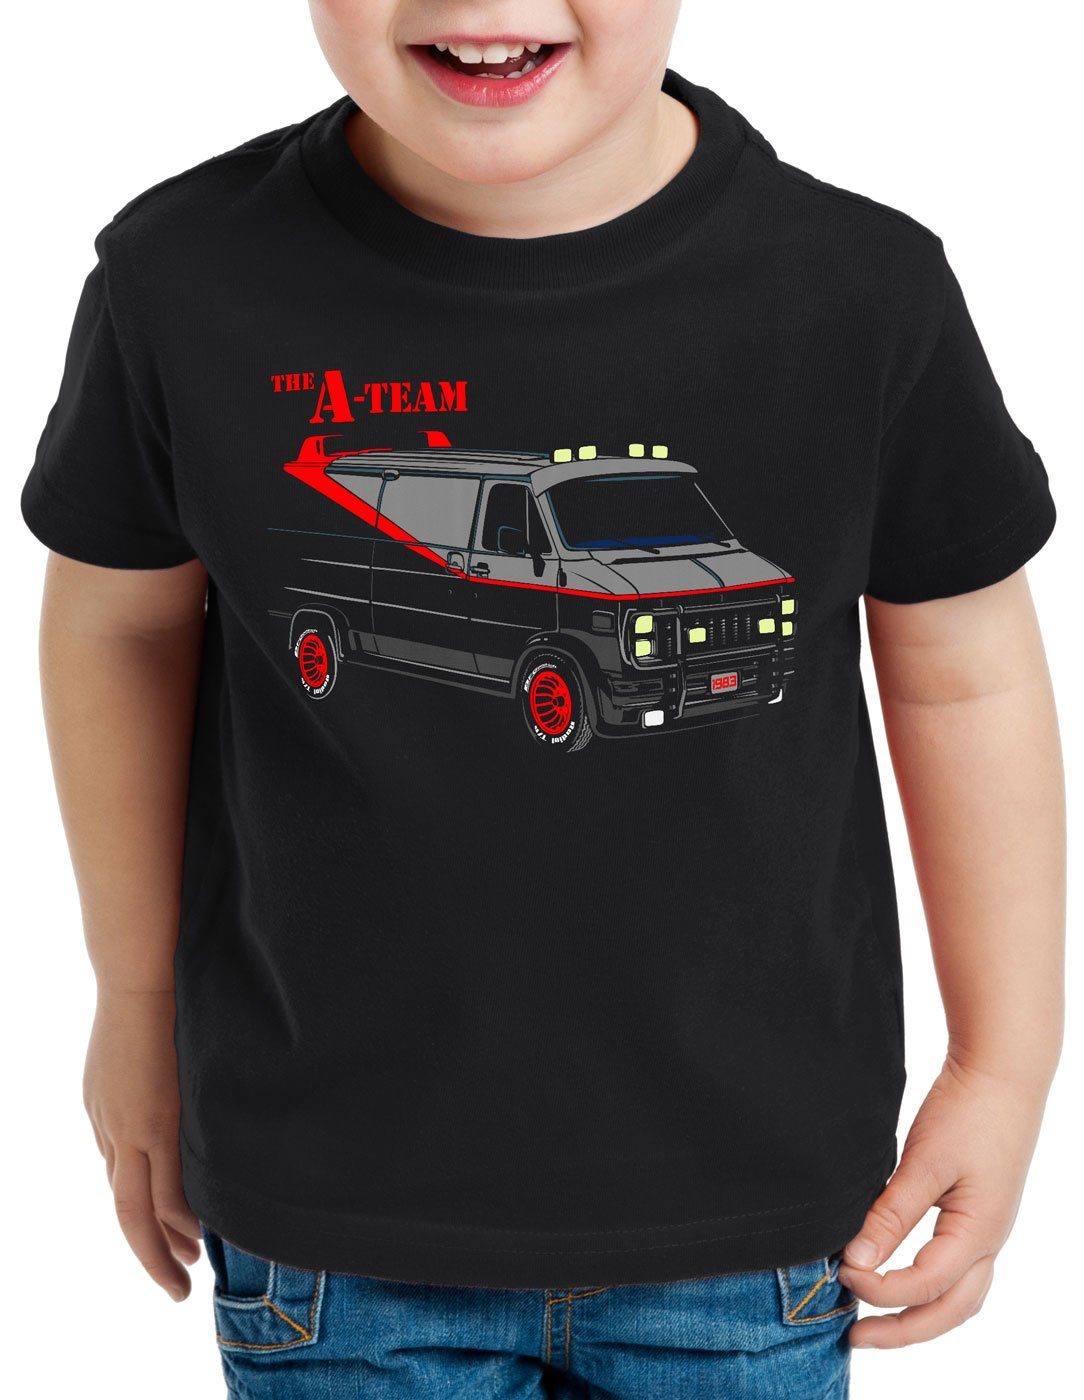 Print-Shirt minivan murdock Kinder a Van hannibal T-Shirt style3 Team